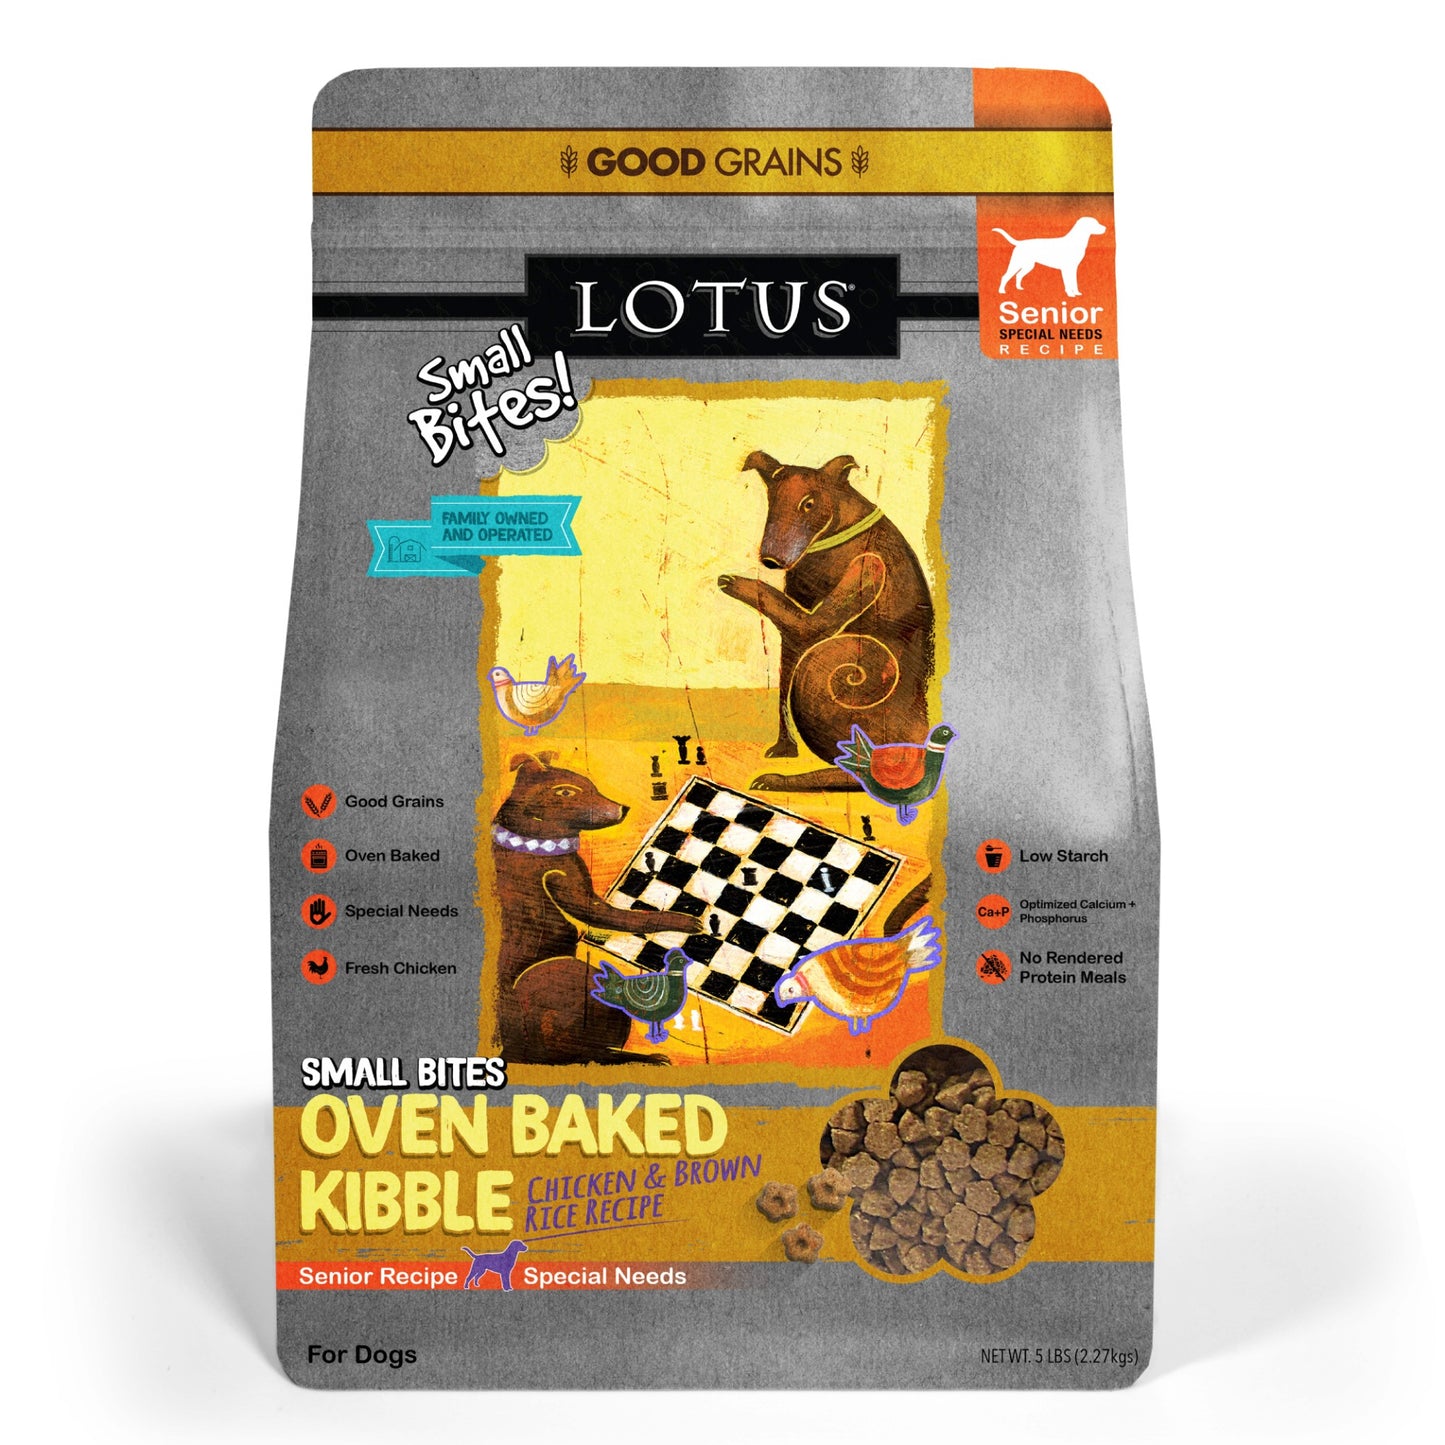 Lotus Small Bites Oven Baked Senior Recipe Dog Kibble